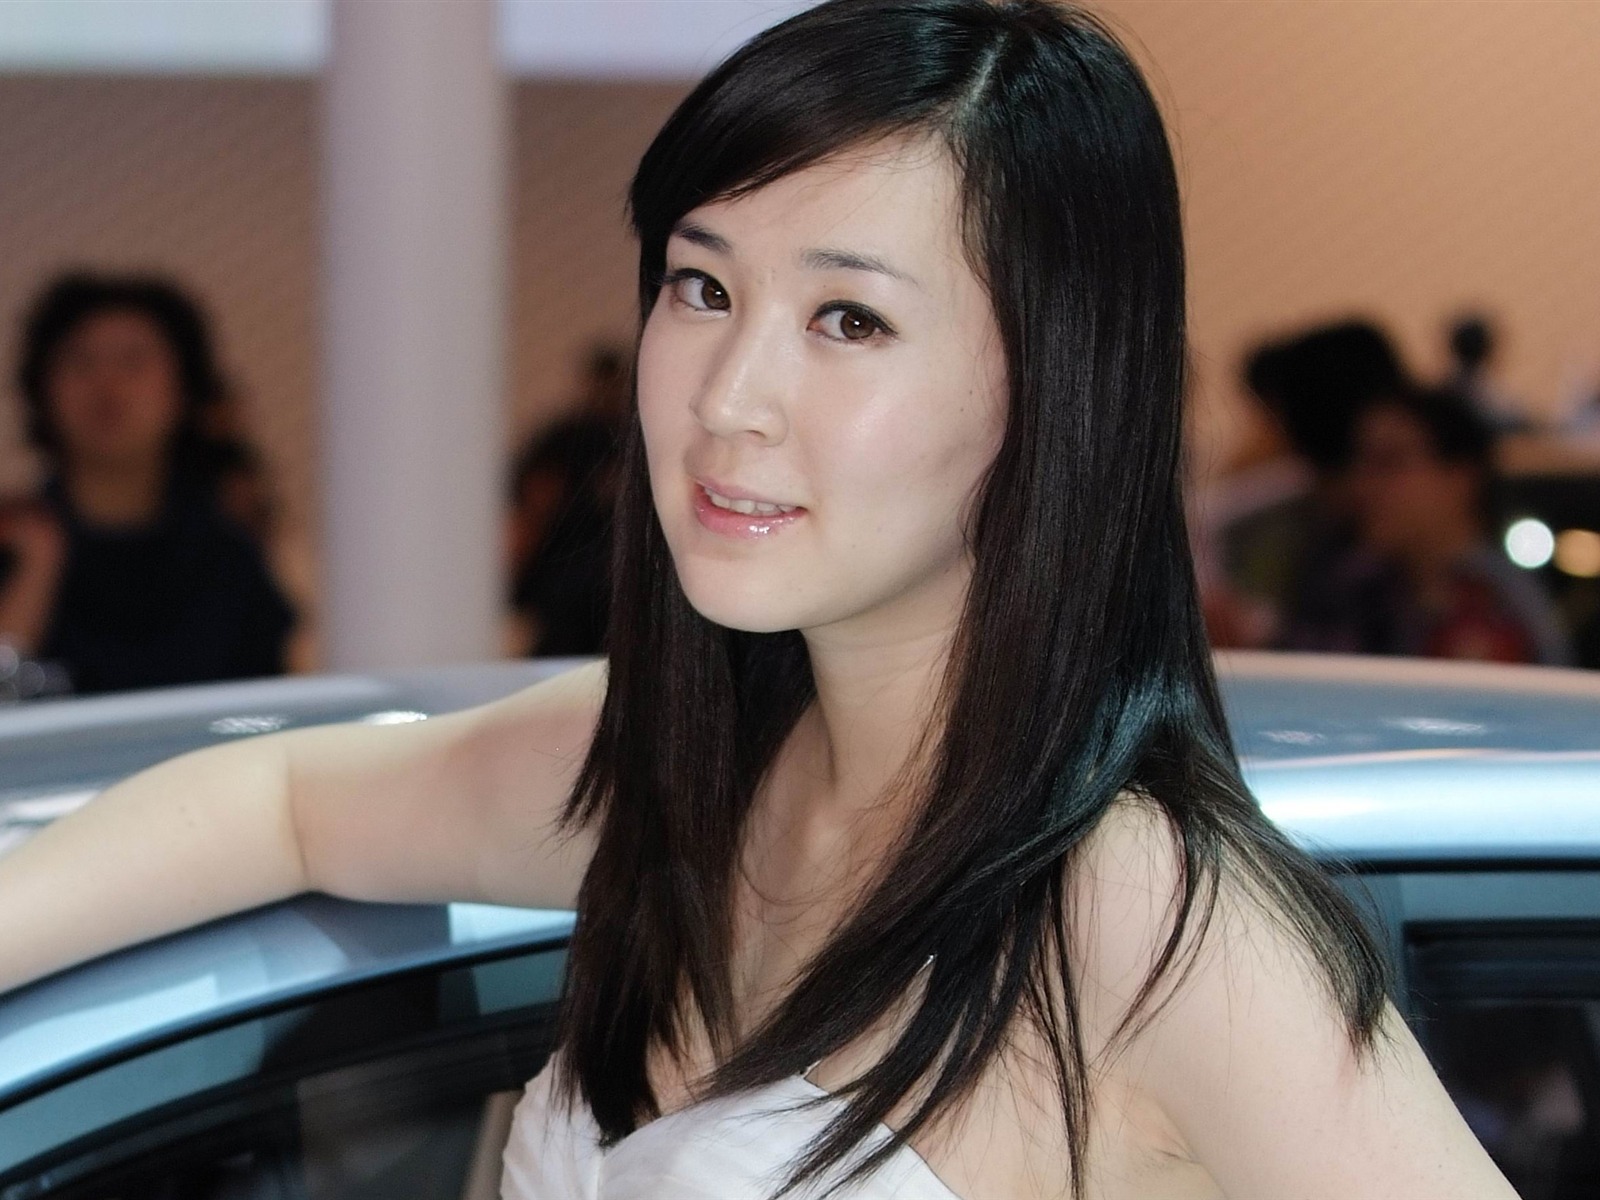 2010 Beijing International Auto Show beauty (rebar works) #5 - 1600x1200